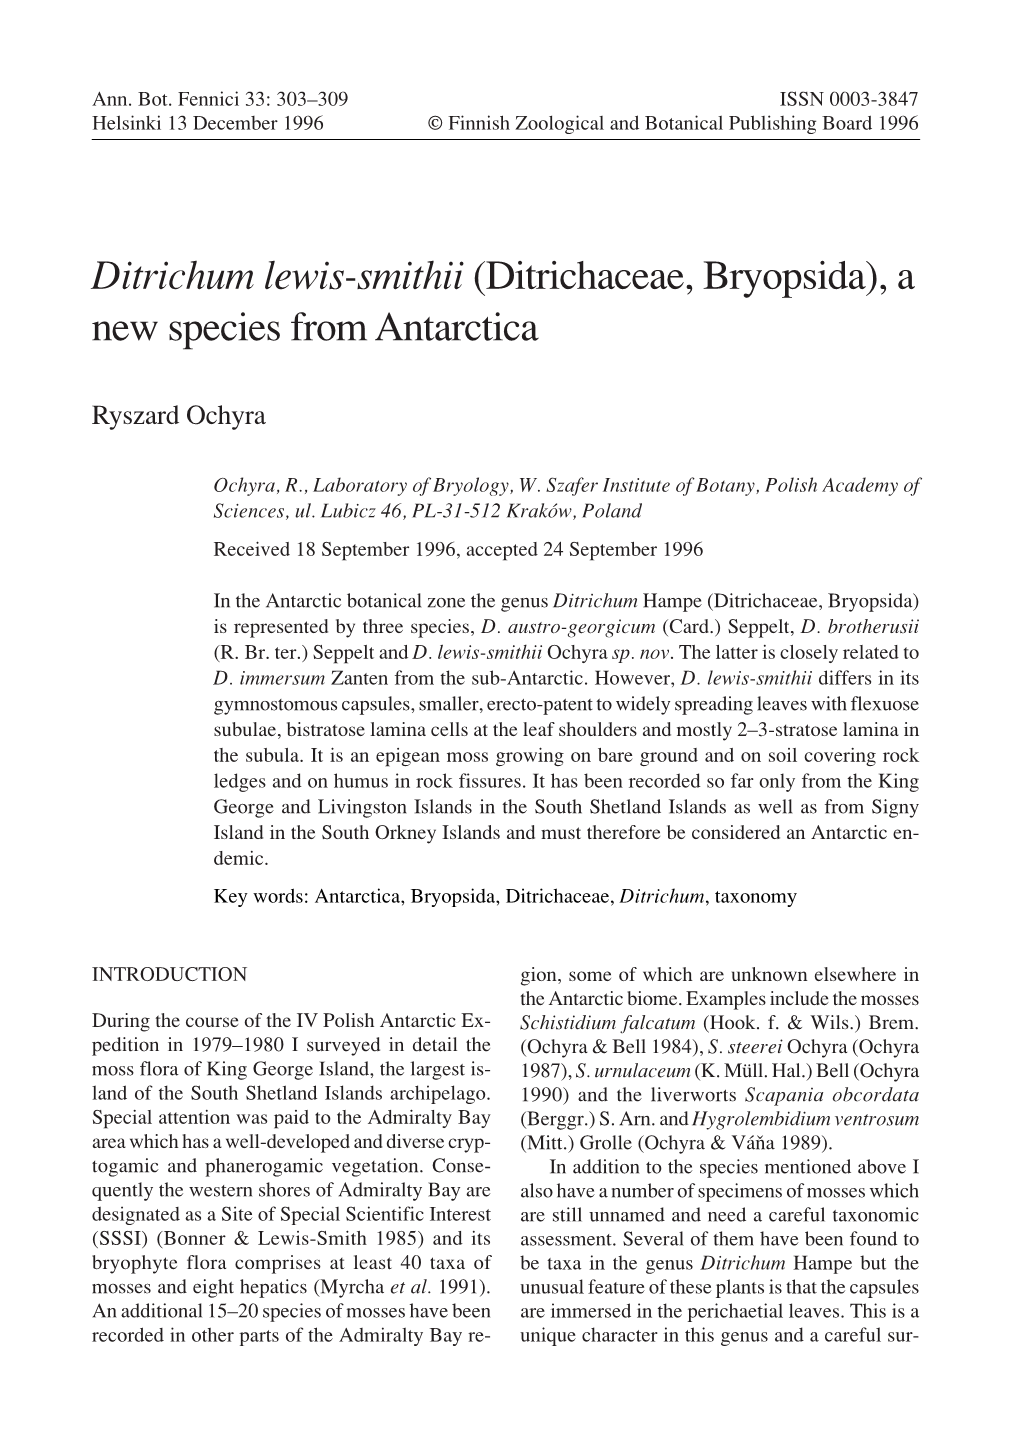 Ditrichum Lewis-Smithii (Ditrichaceae, Bryopsida), a New Species from Antarctica